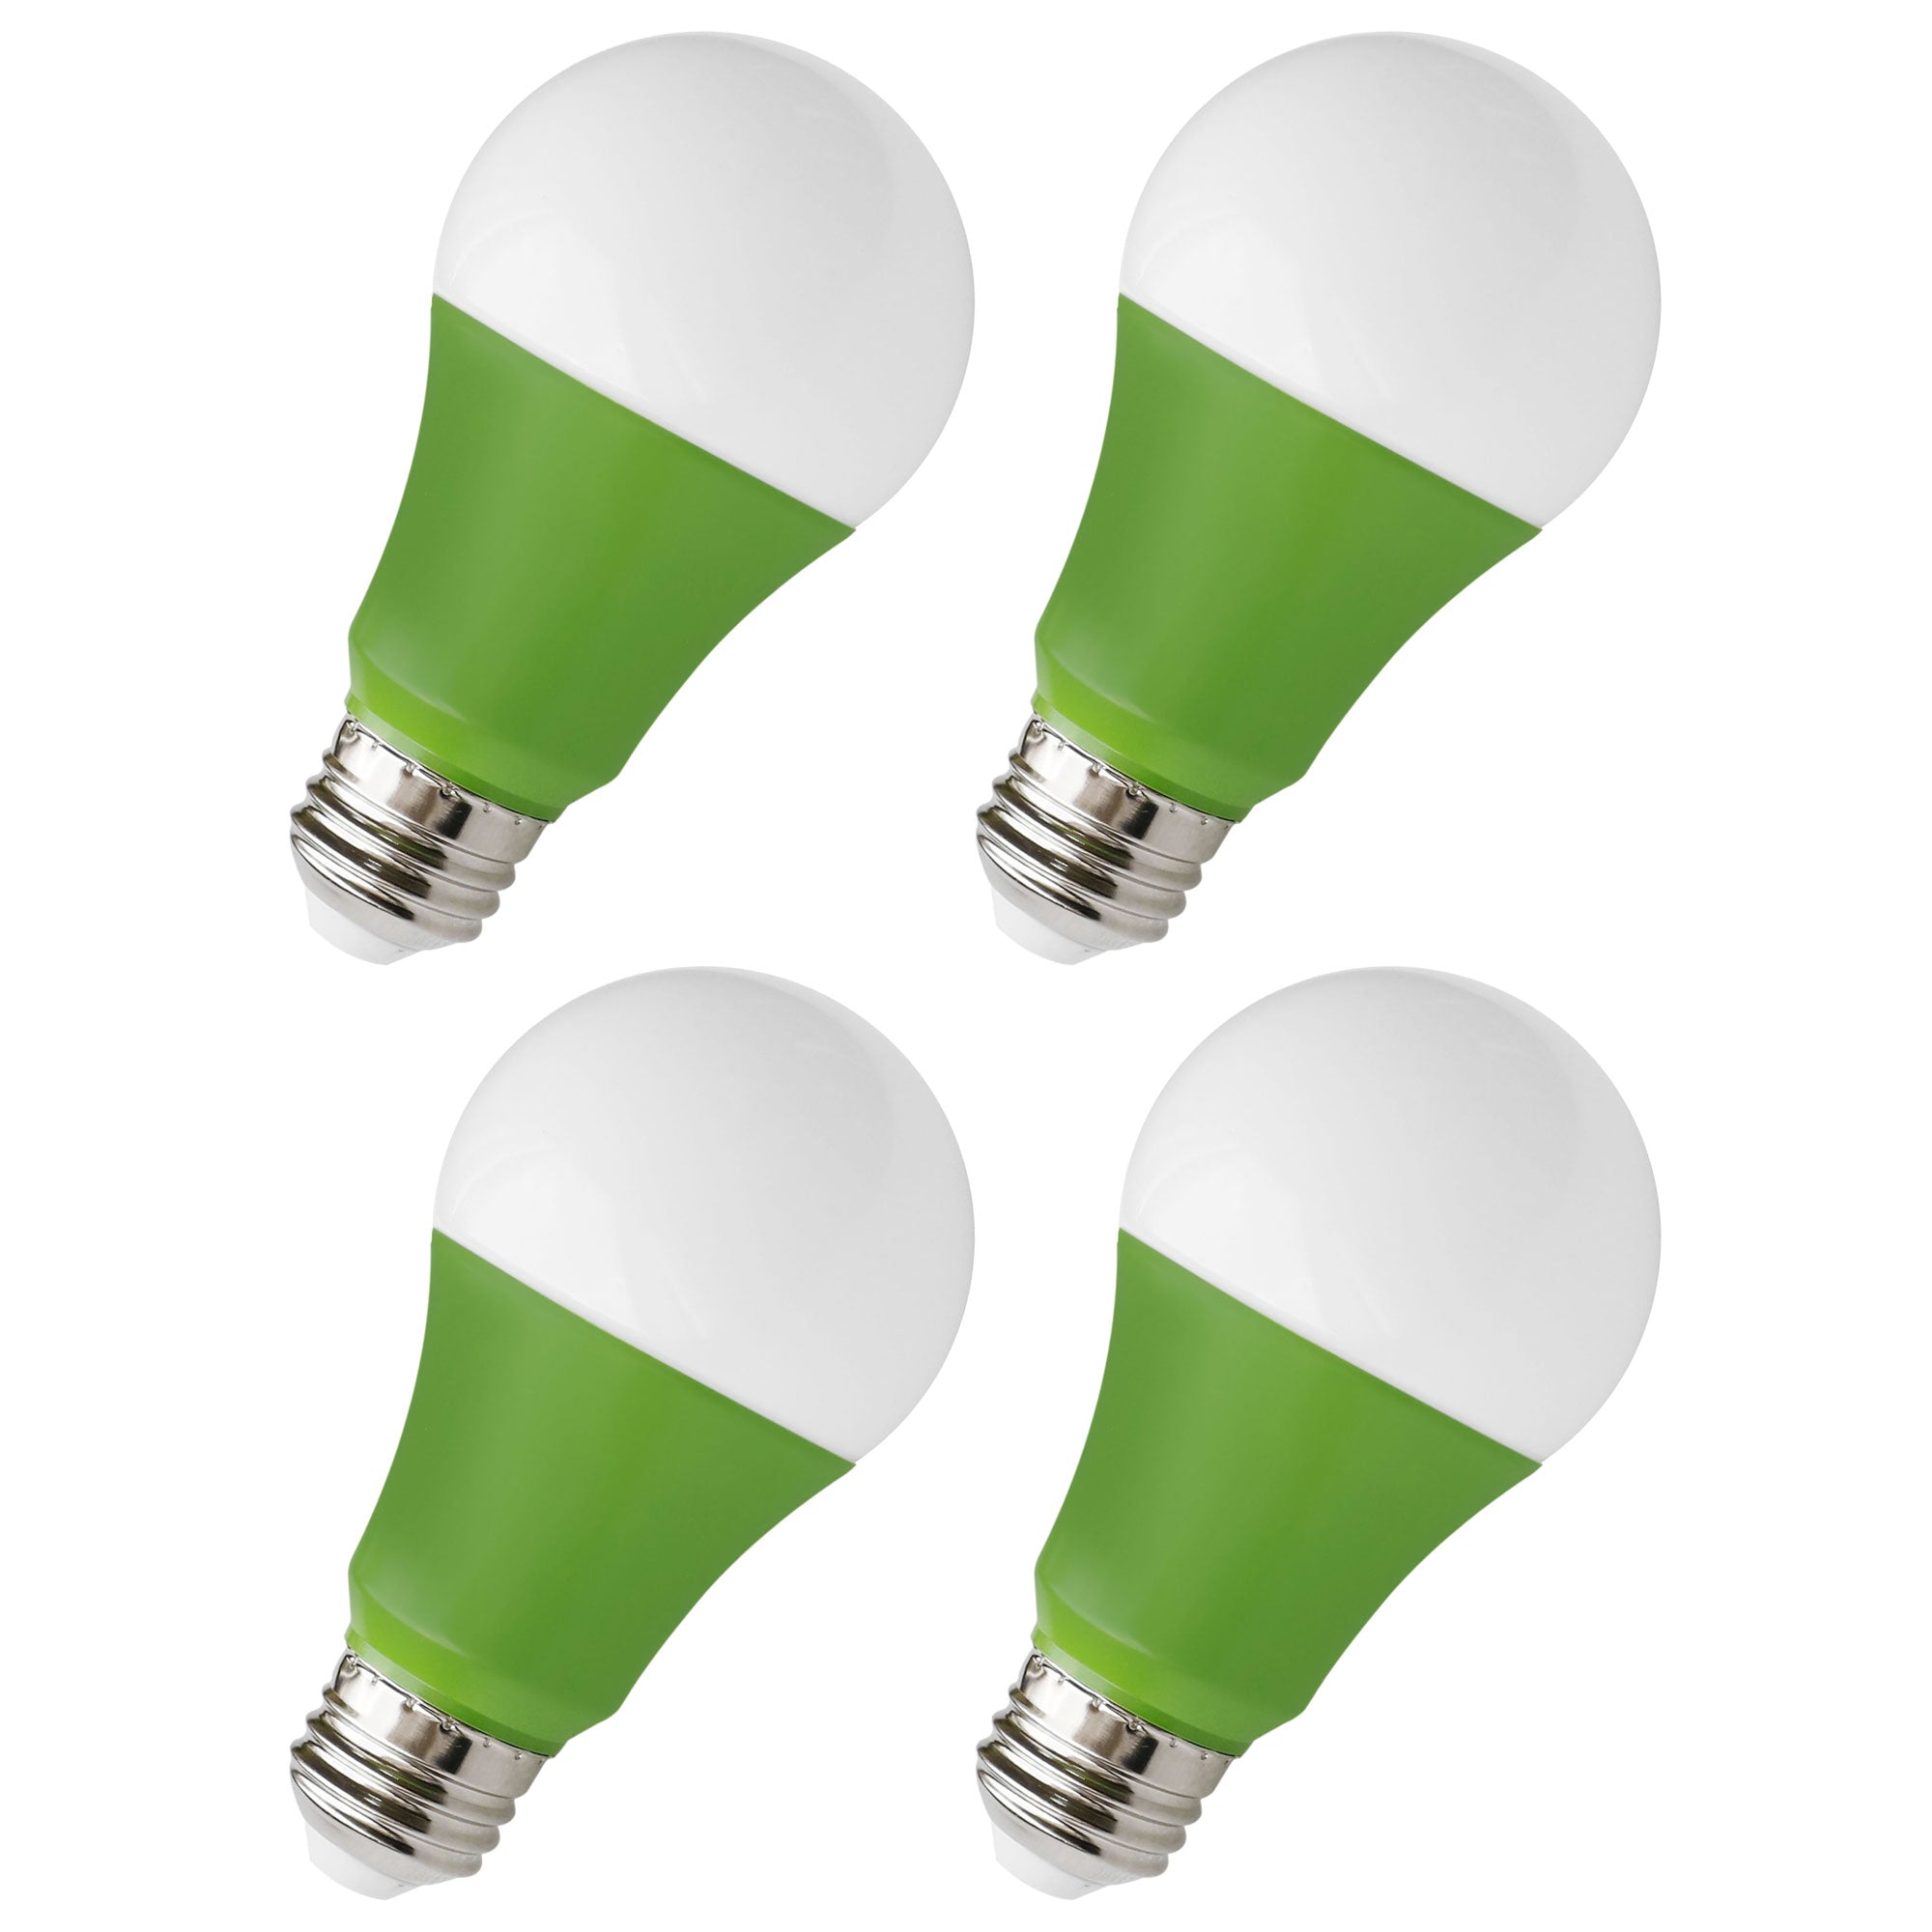 Virigrow A19 E26 LED Indoor Garden Grow Light Bulb